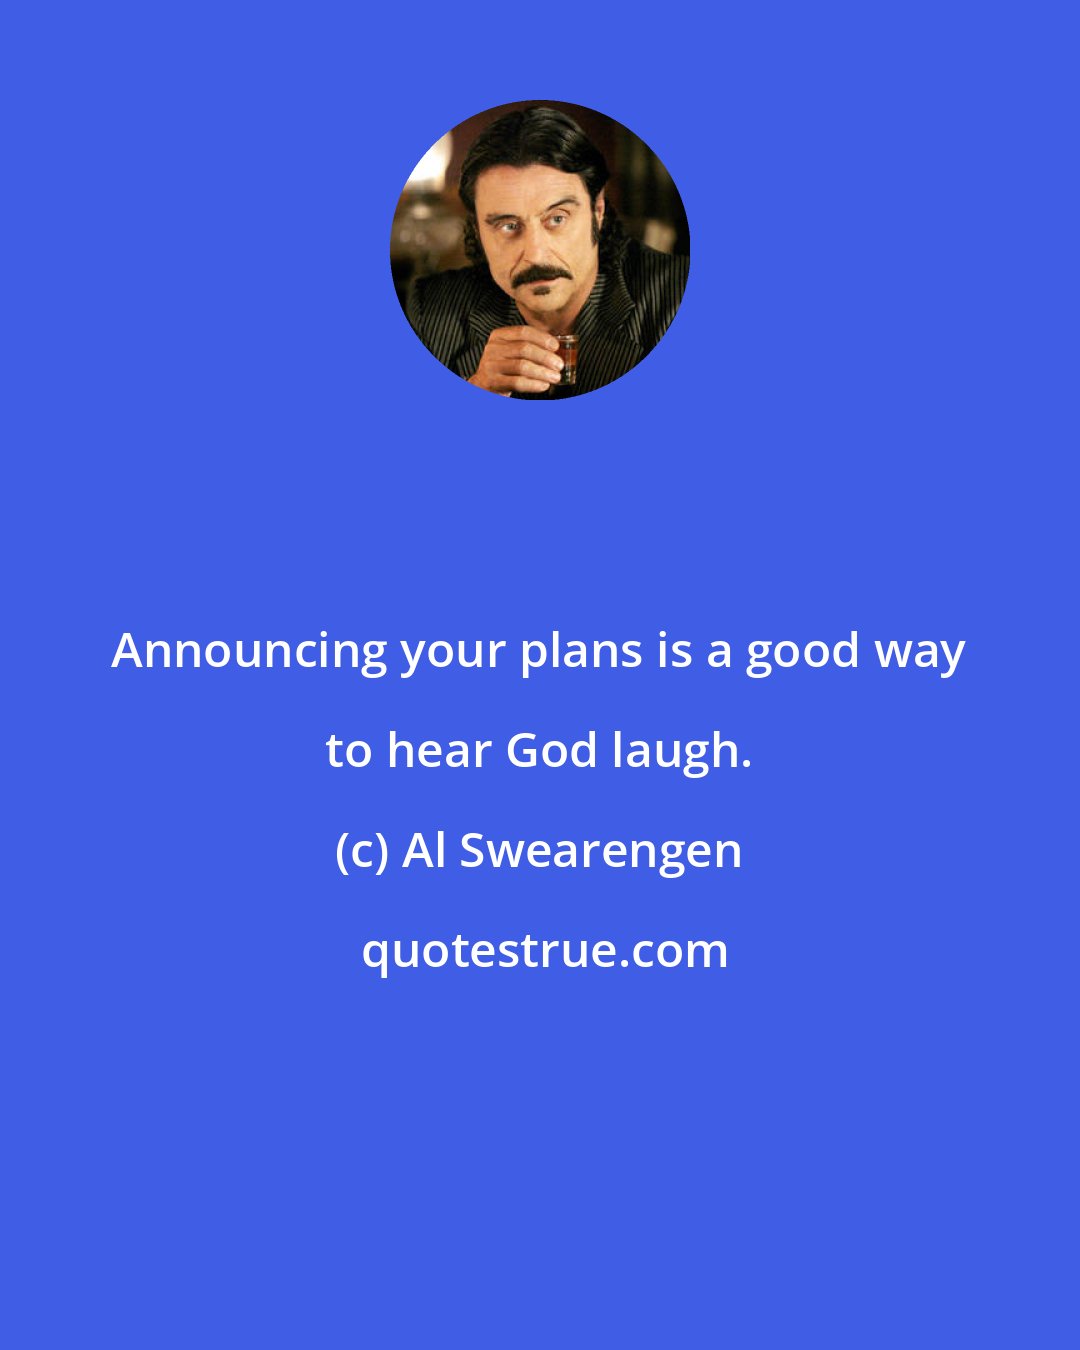 Al Swearengen: Announcing your plans is a good way to hear God laugh.